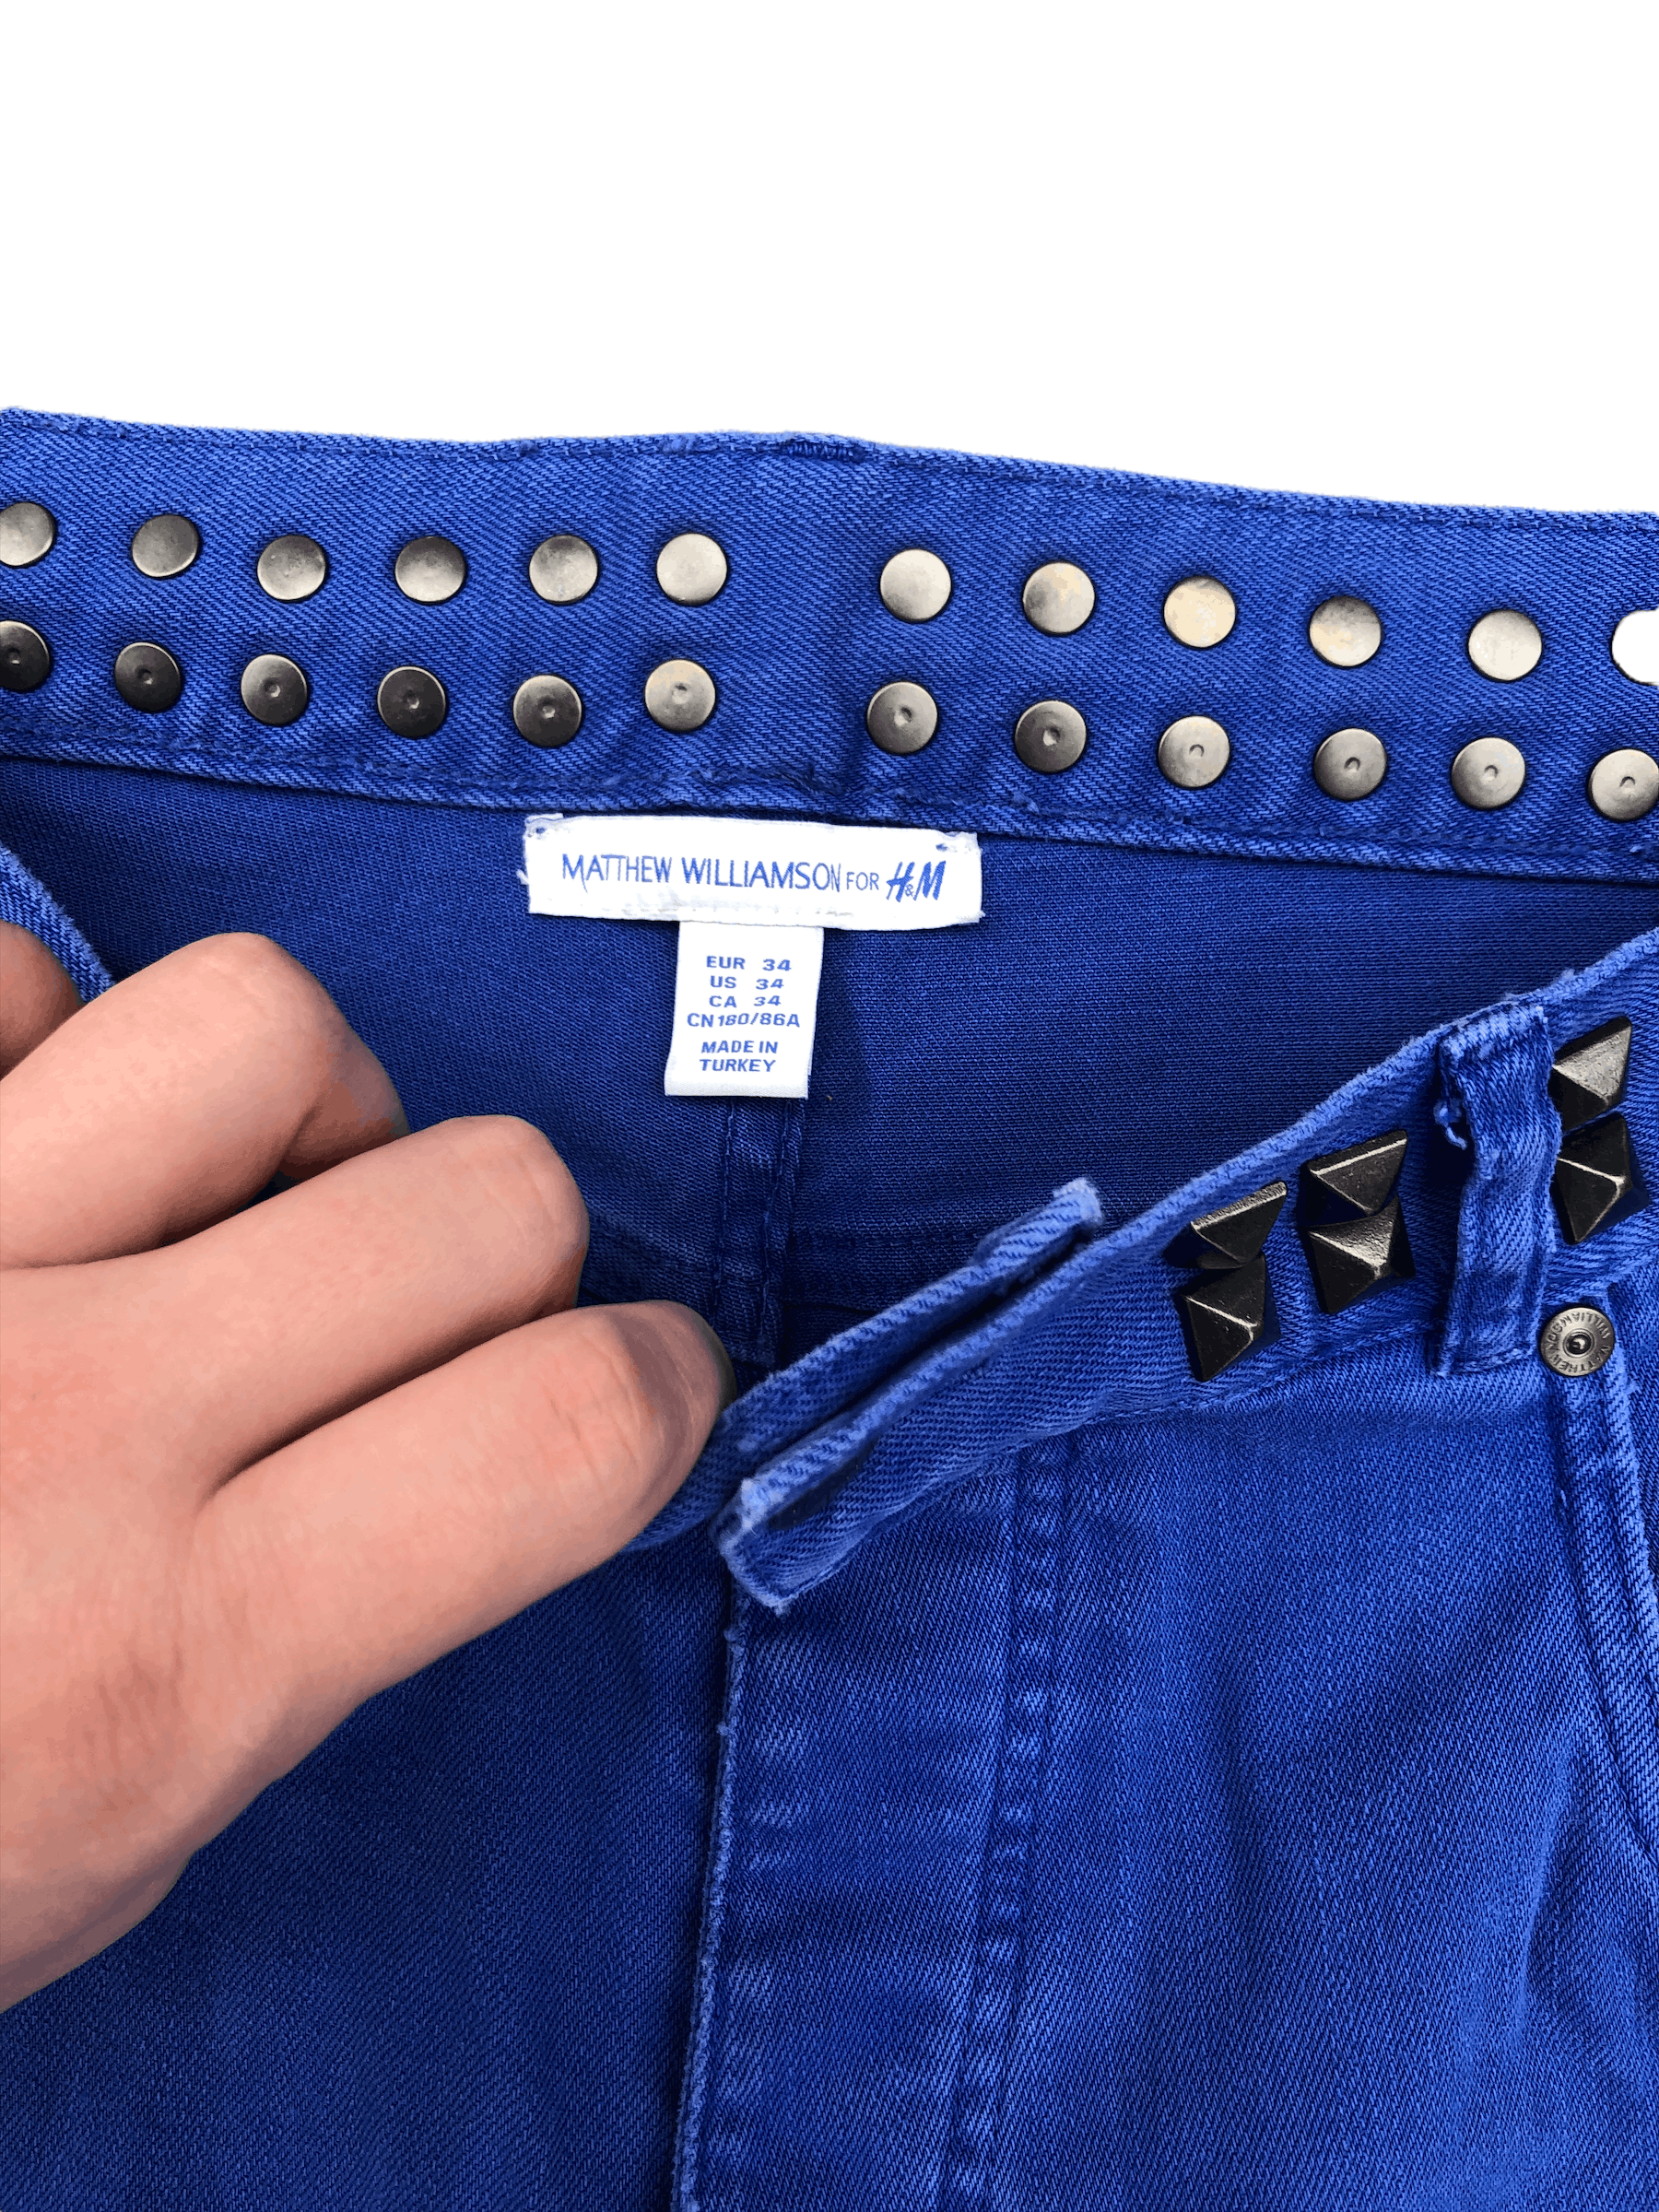 Vintage RARE Matthew Williamson X H&M Studded Jeans Size 34 Blue Size US 34 / EU 50 - 3 Thumbnail